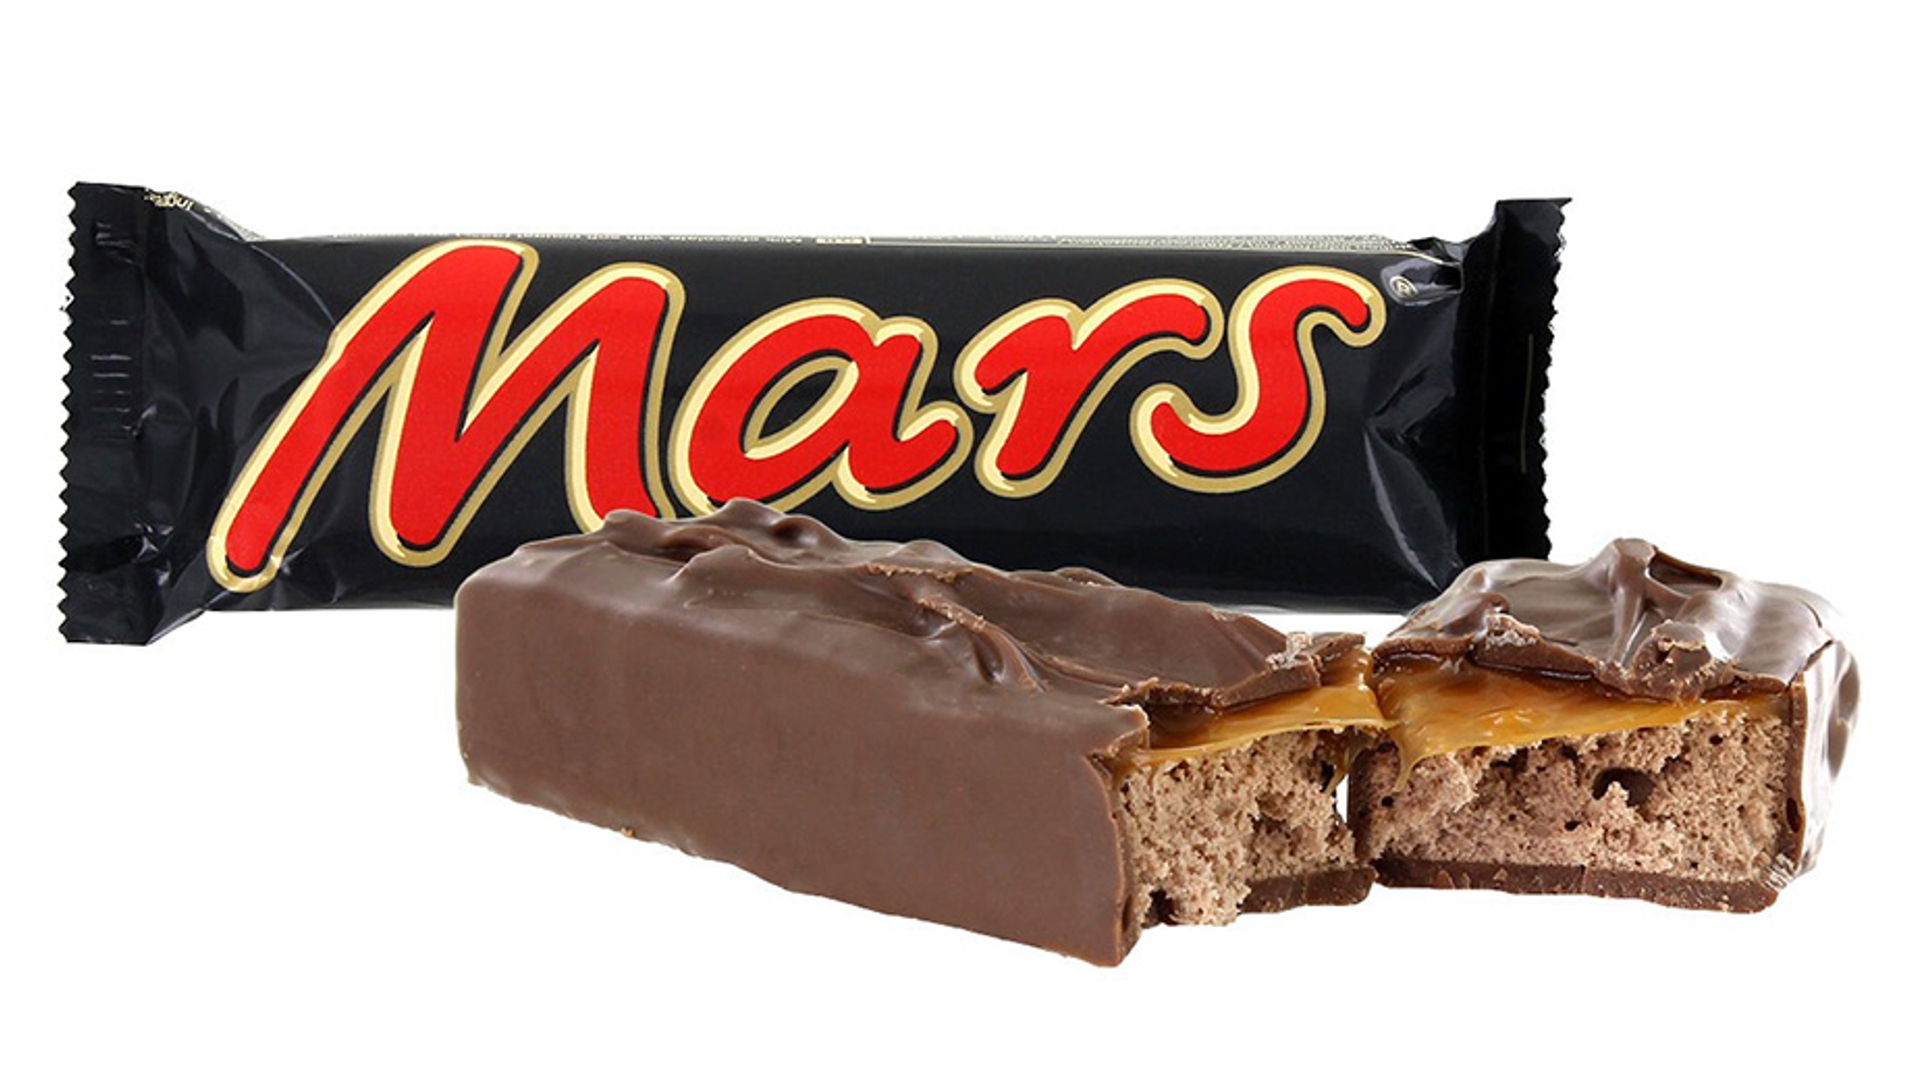 Mars-bar